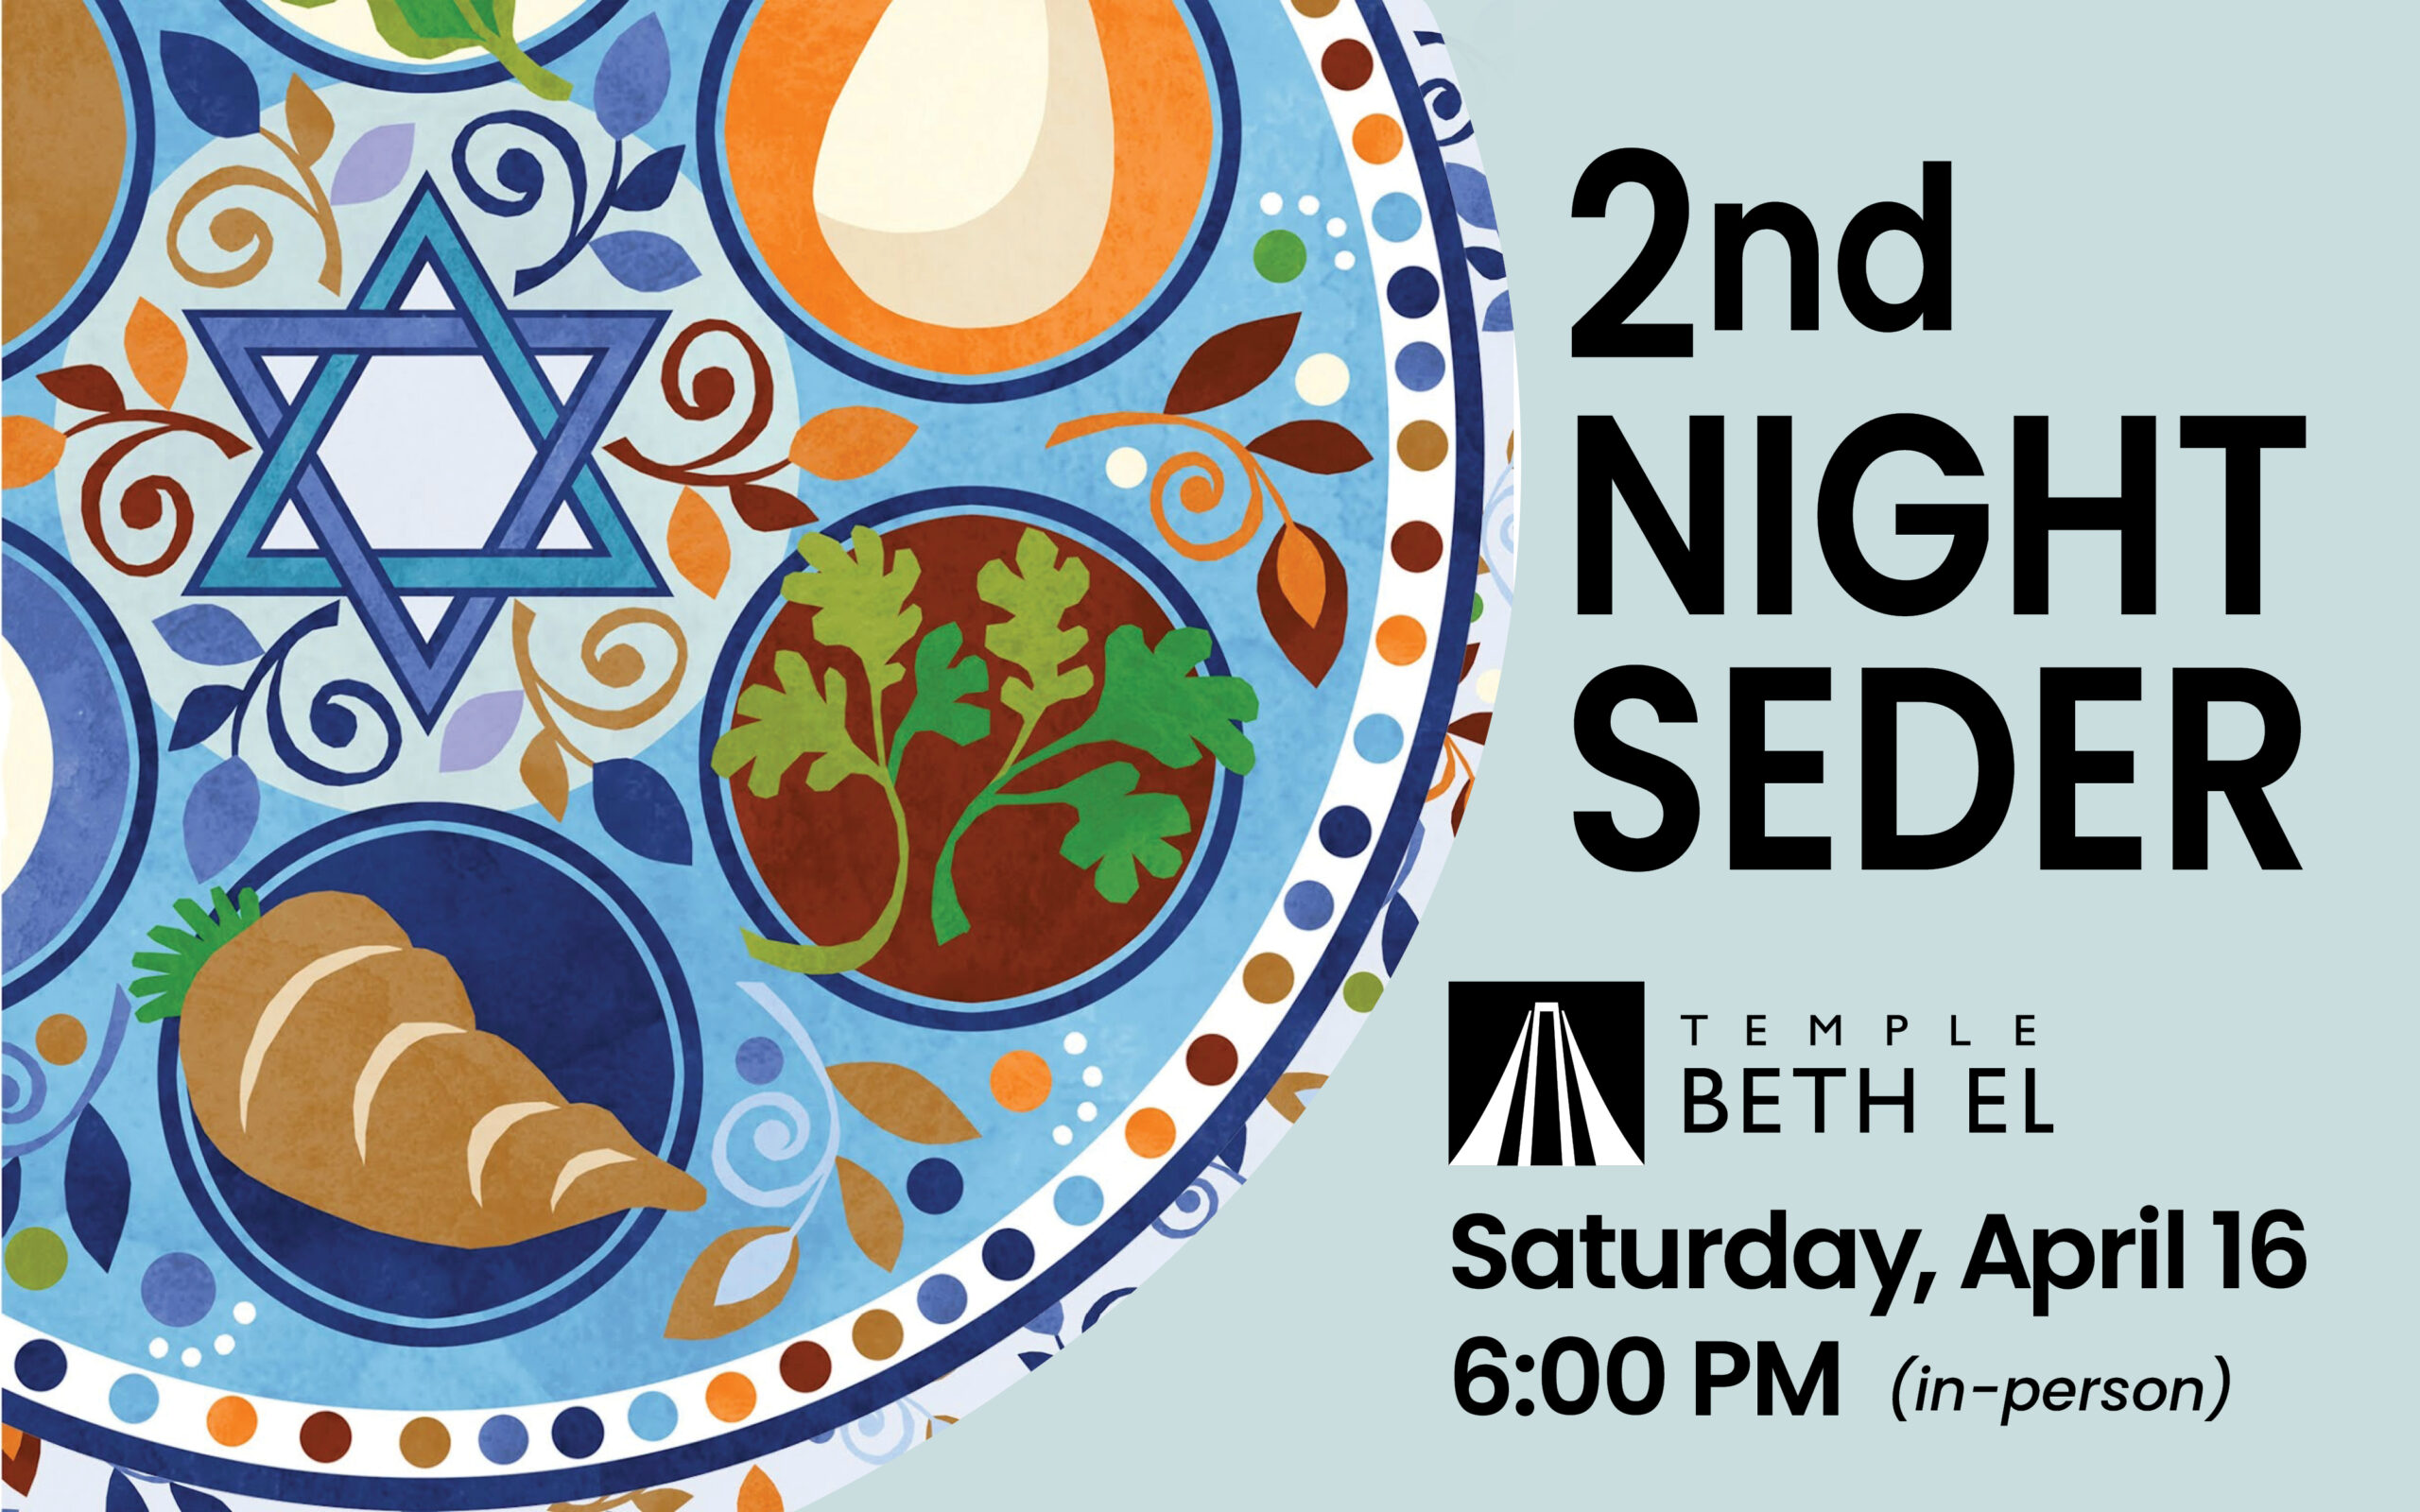 TBE's 2nd Night Seder